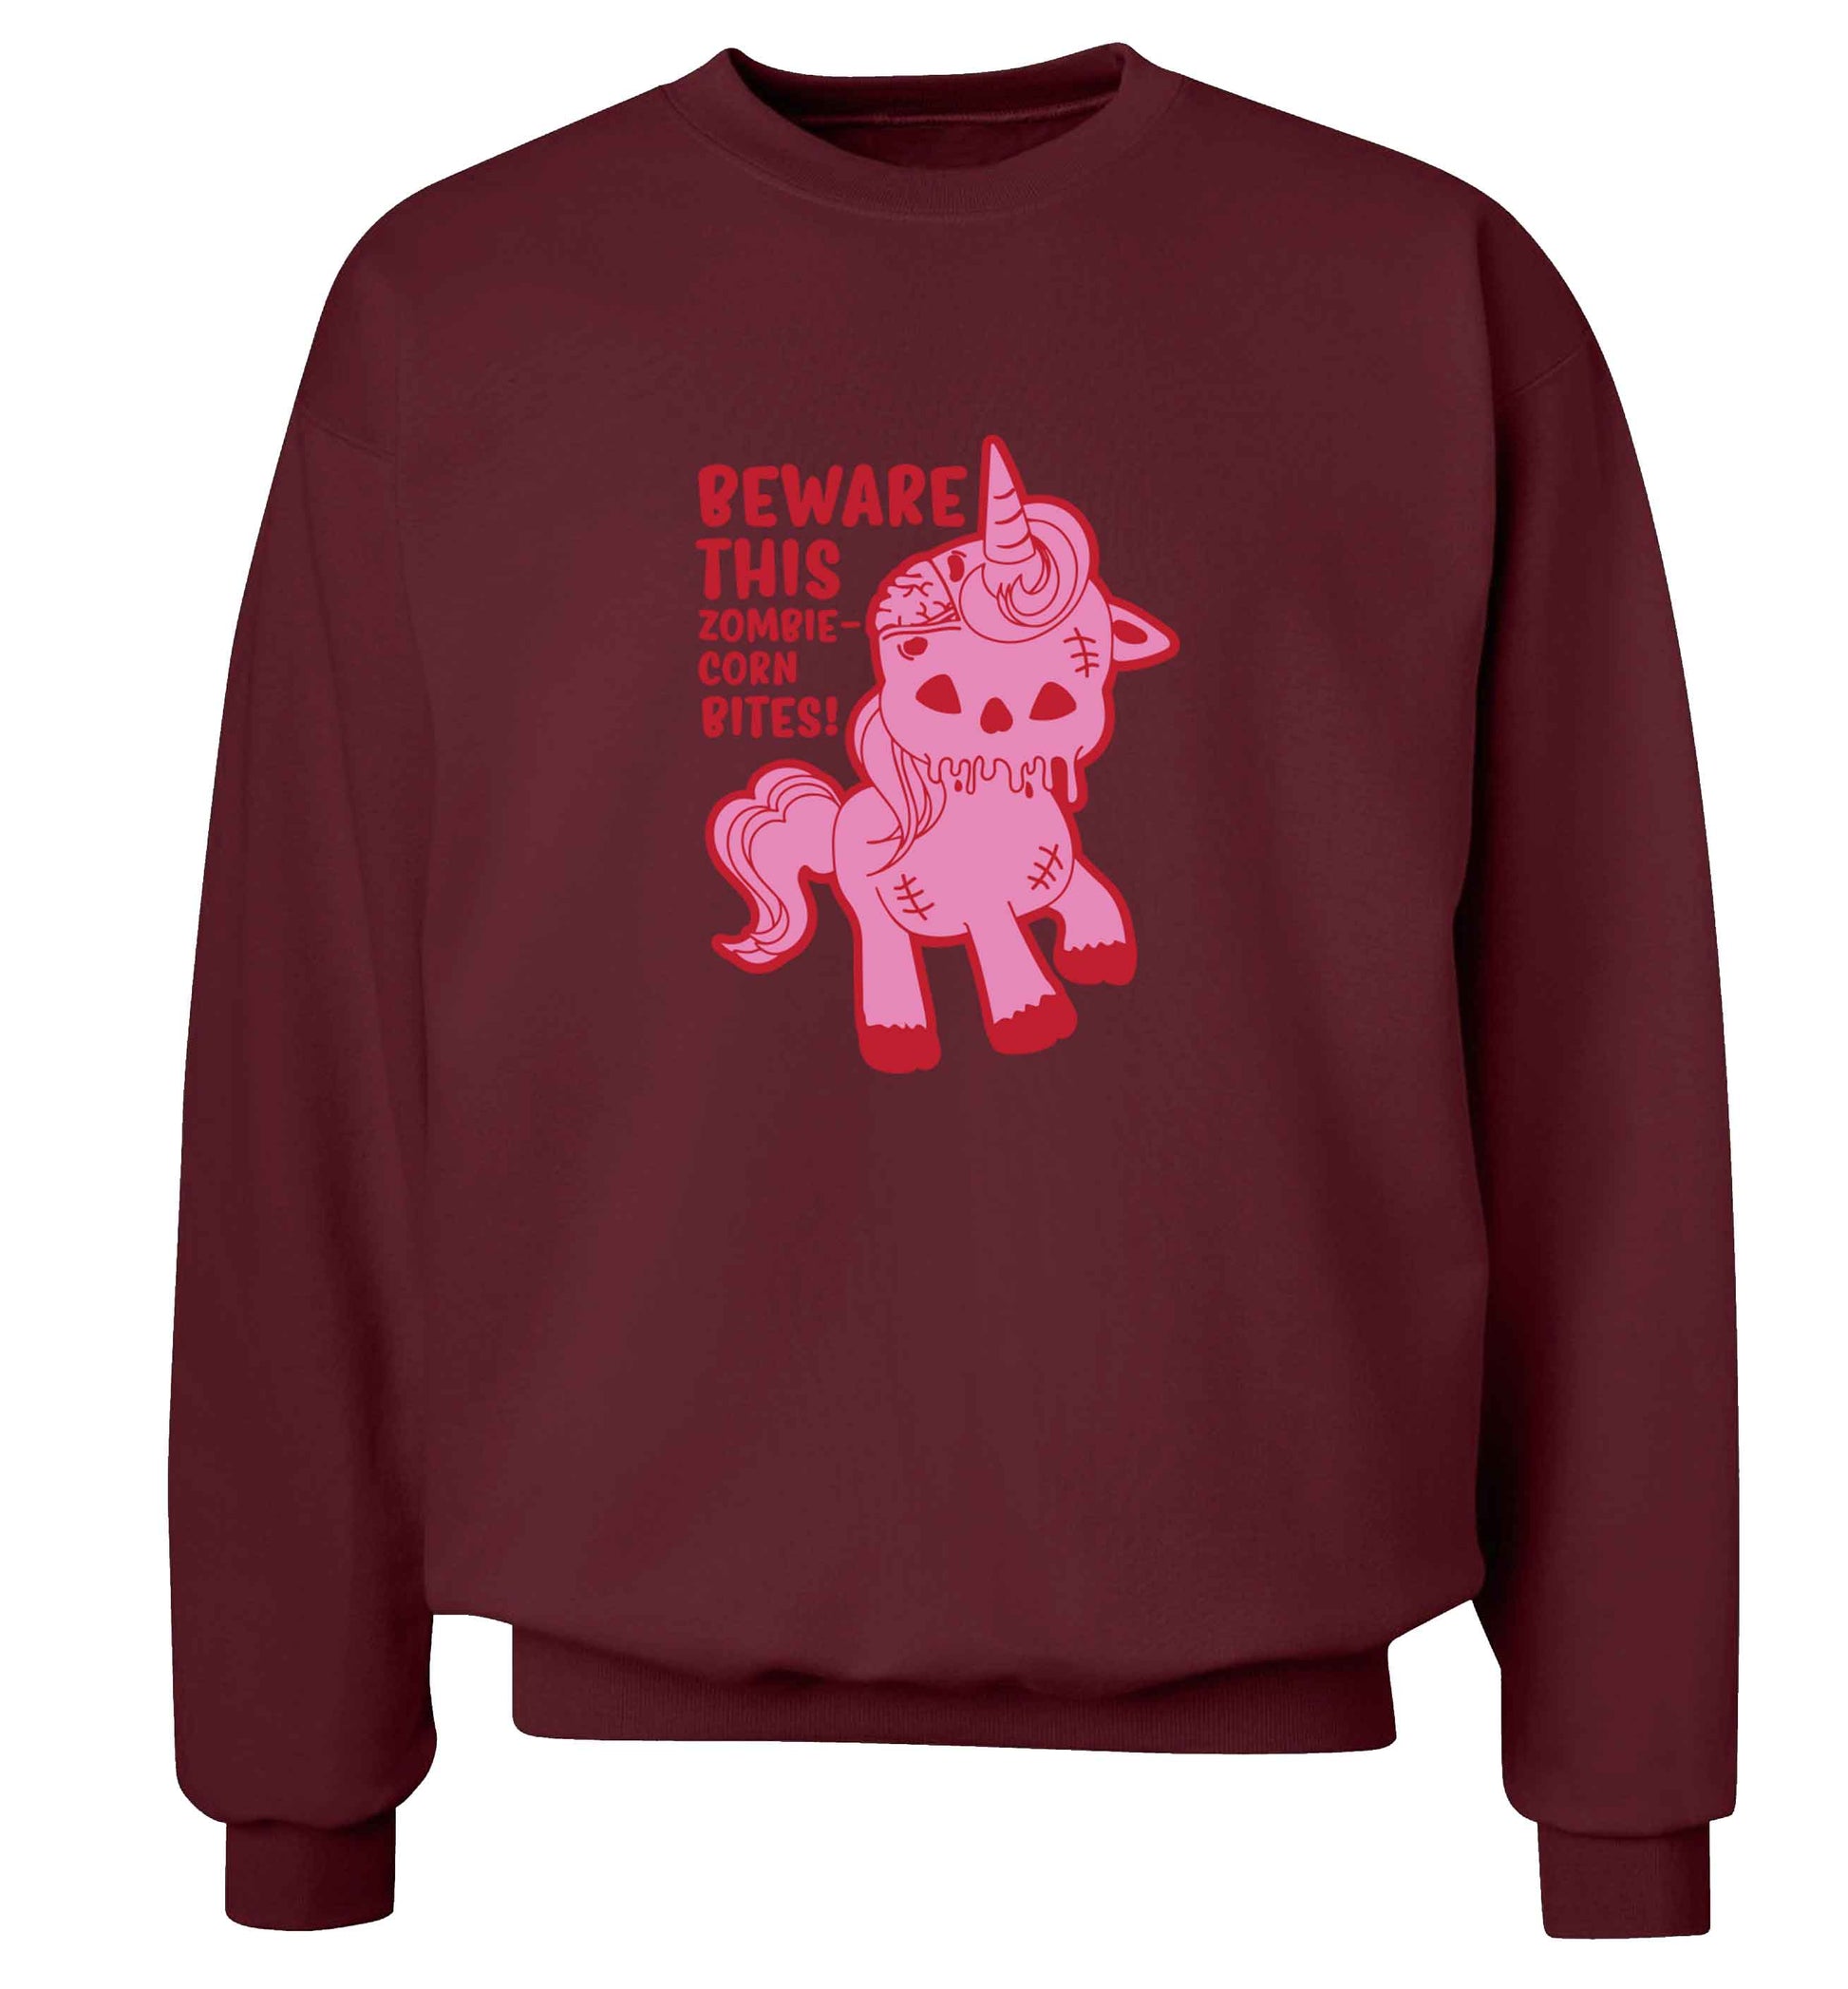 Beware this zombiecorn bites adult's unisex maroon sweater 2XL